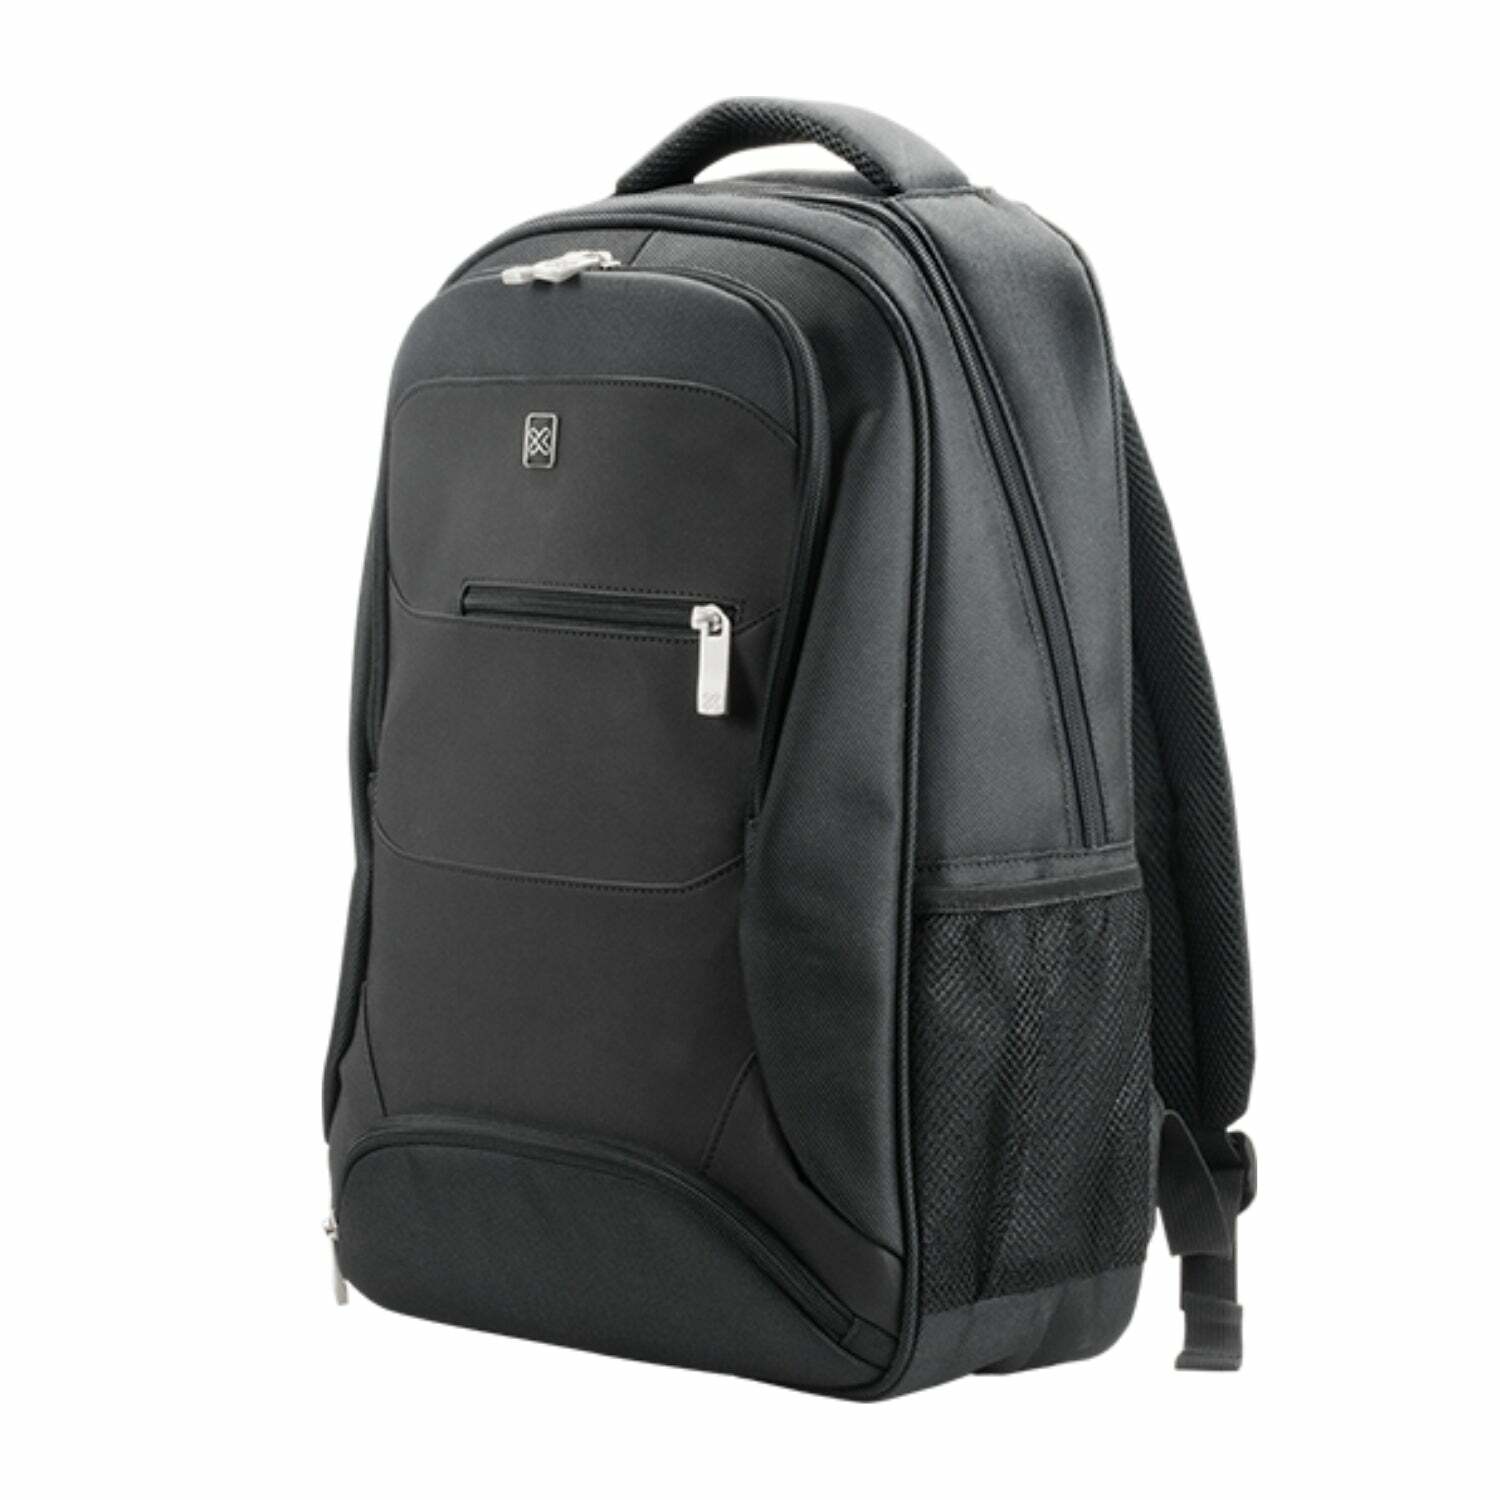 Klip Xtreme - Tundra KNB-575 Laptop Backpack, Black